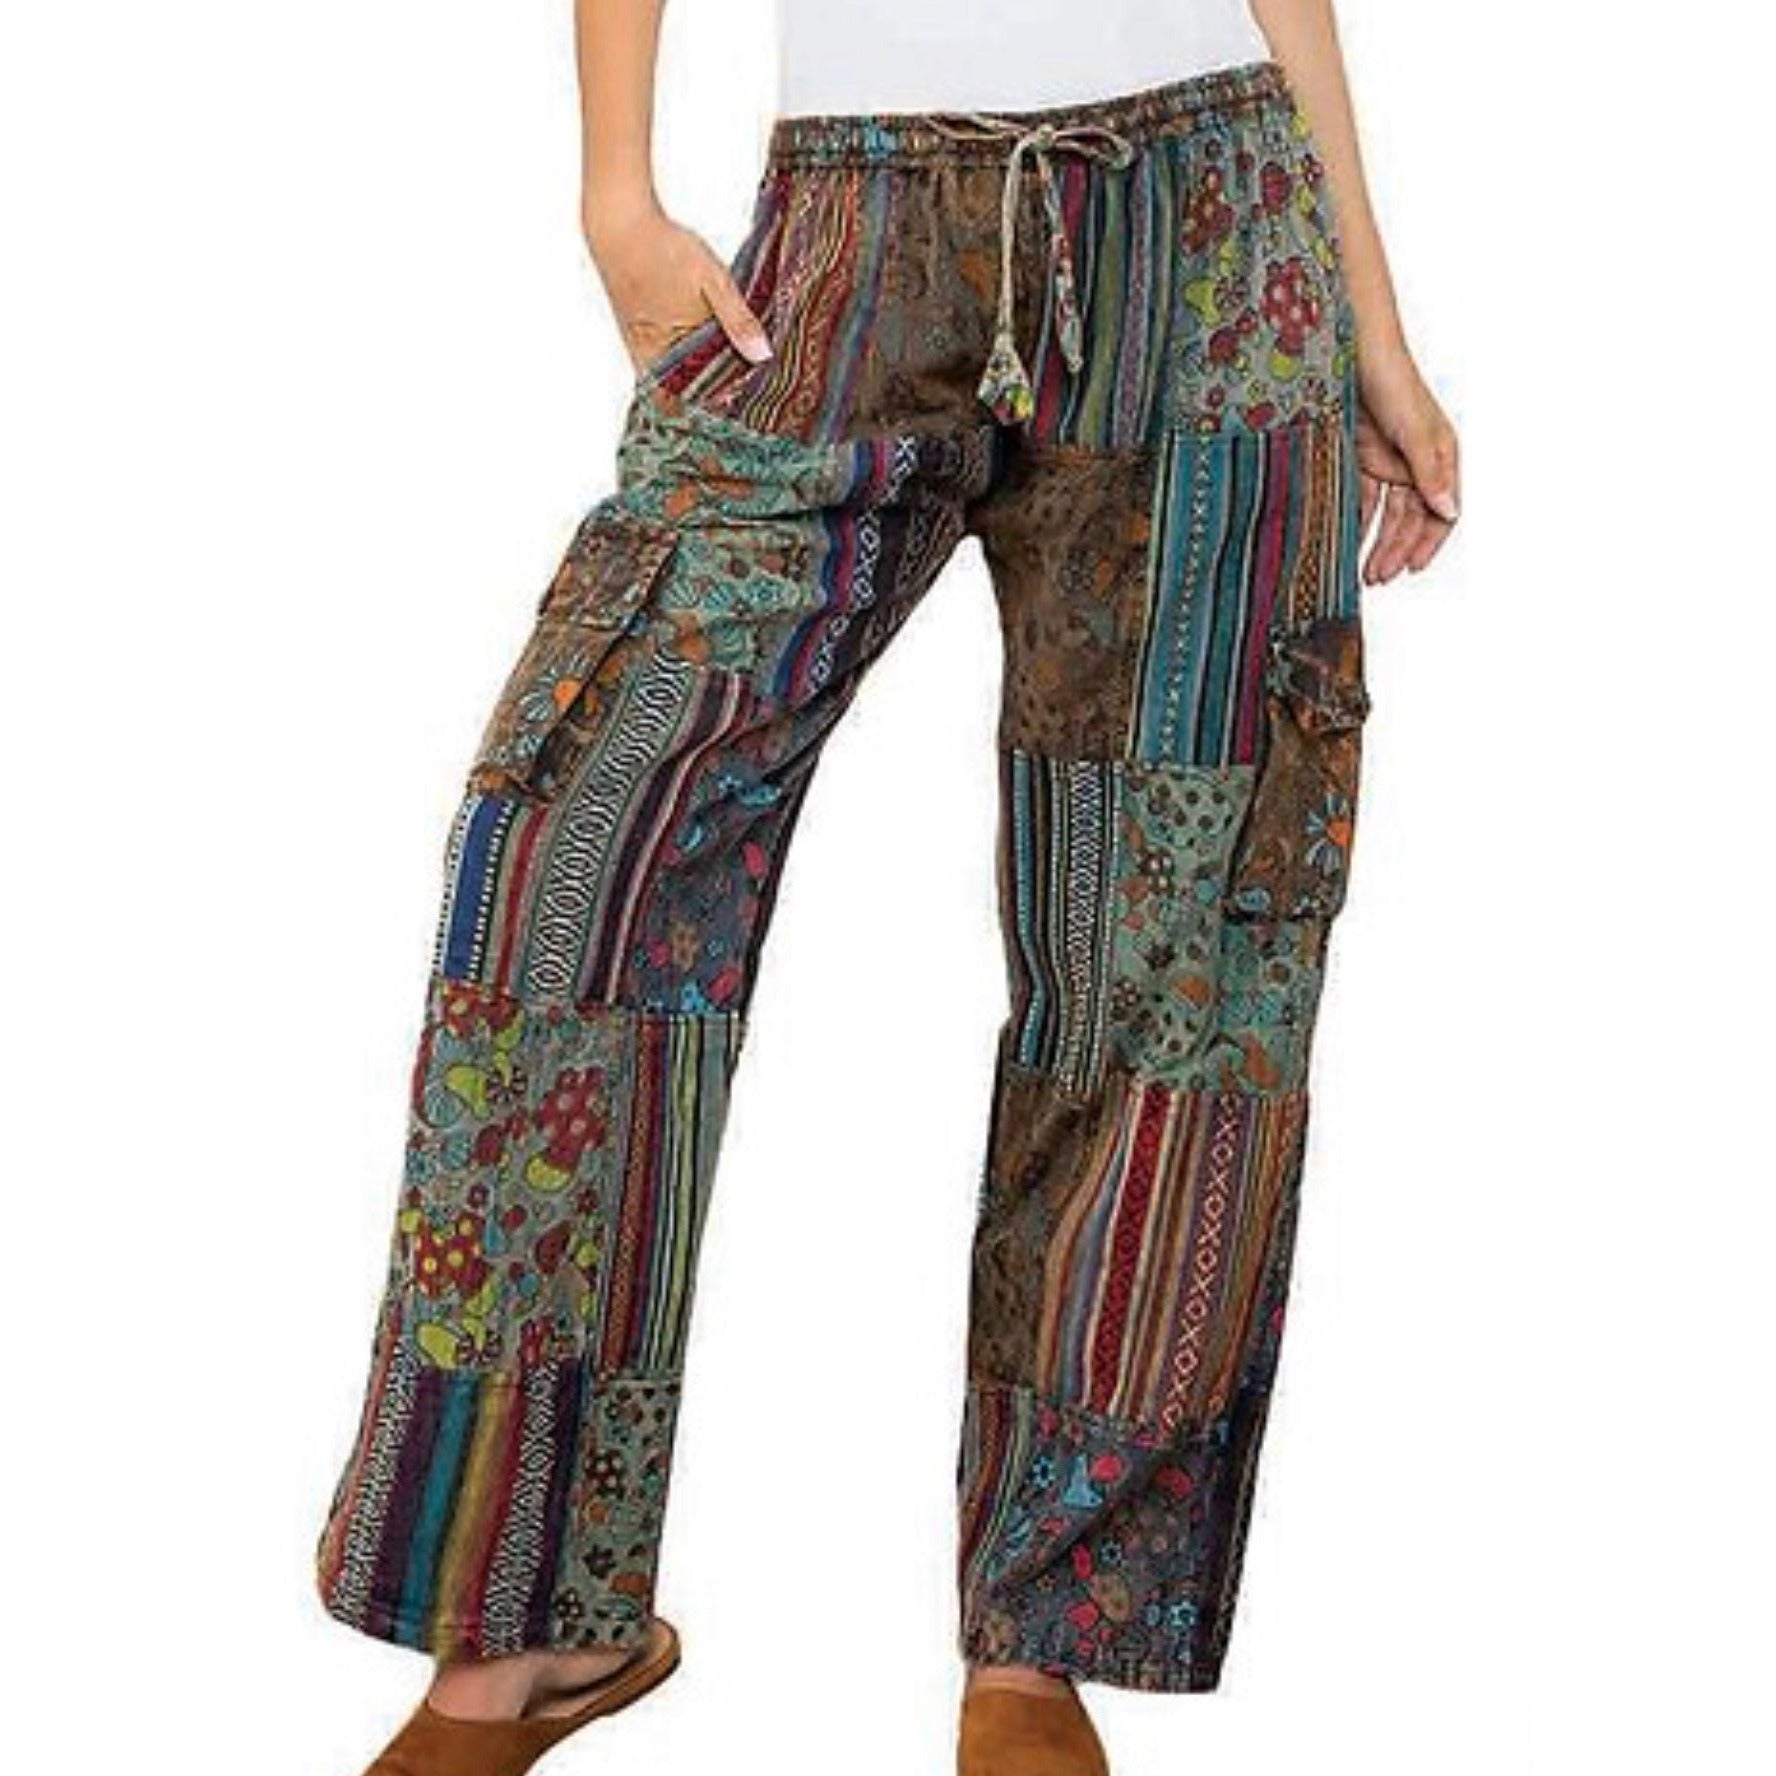 Women039s Boho Harem Pants Baggy  Boho Hippie Pants Casual Loose   Small to Large  eBay